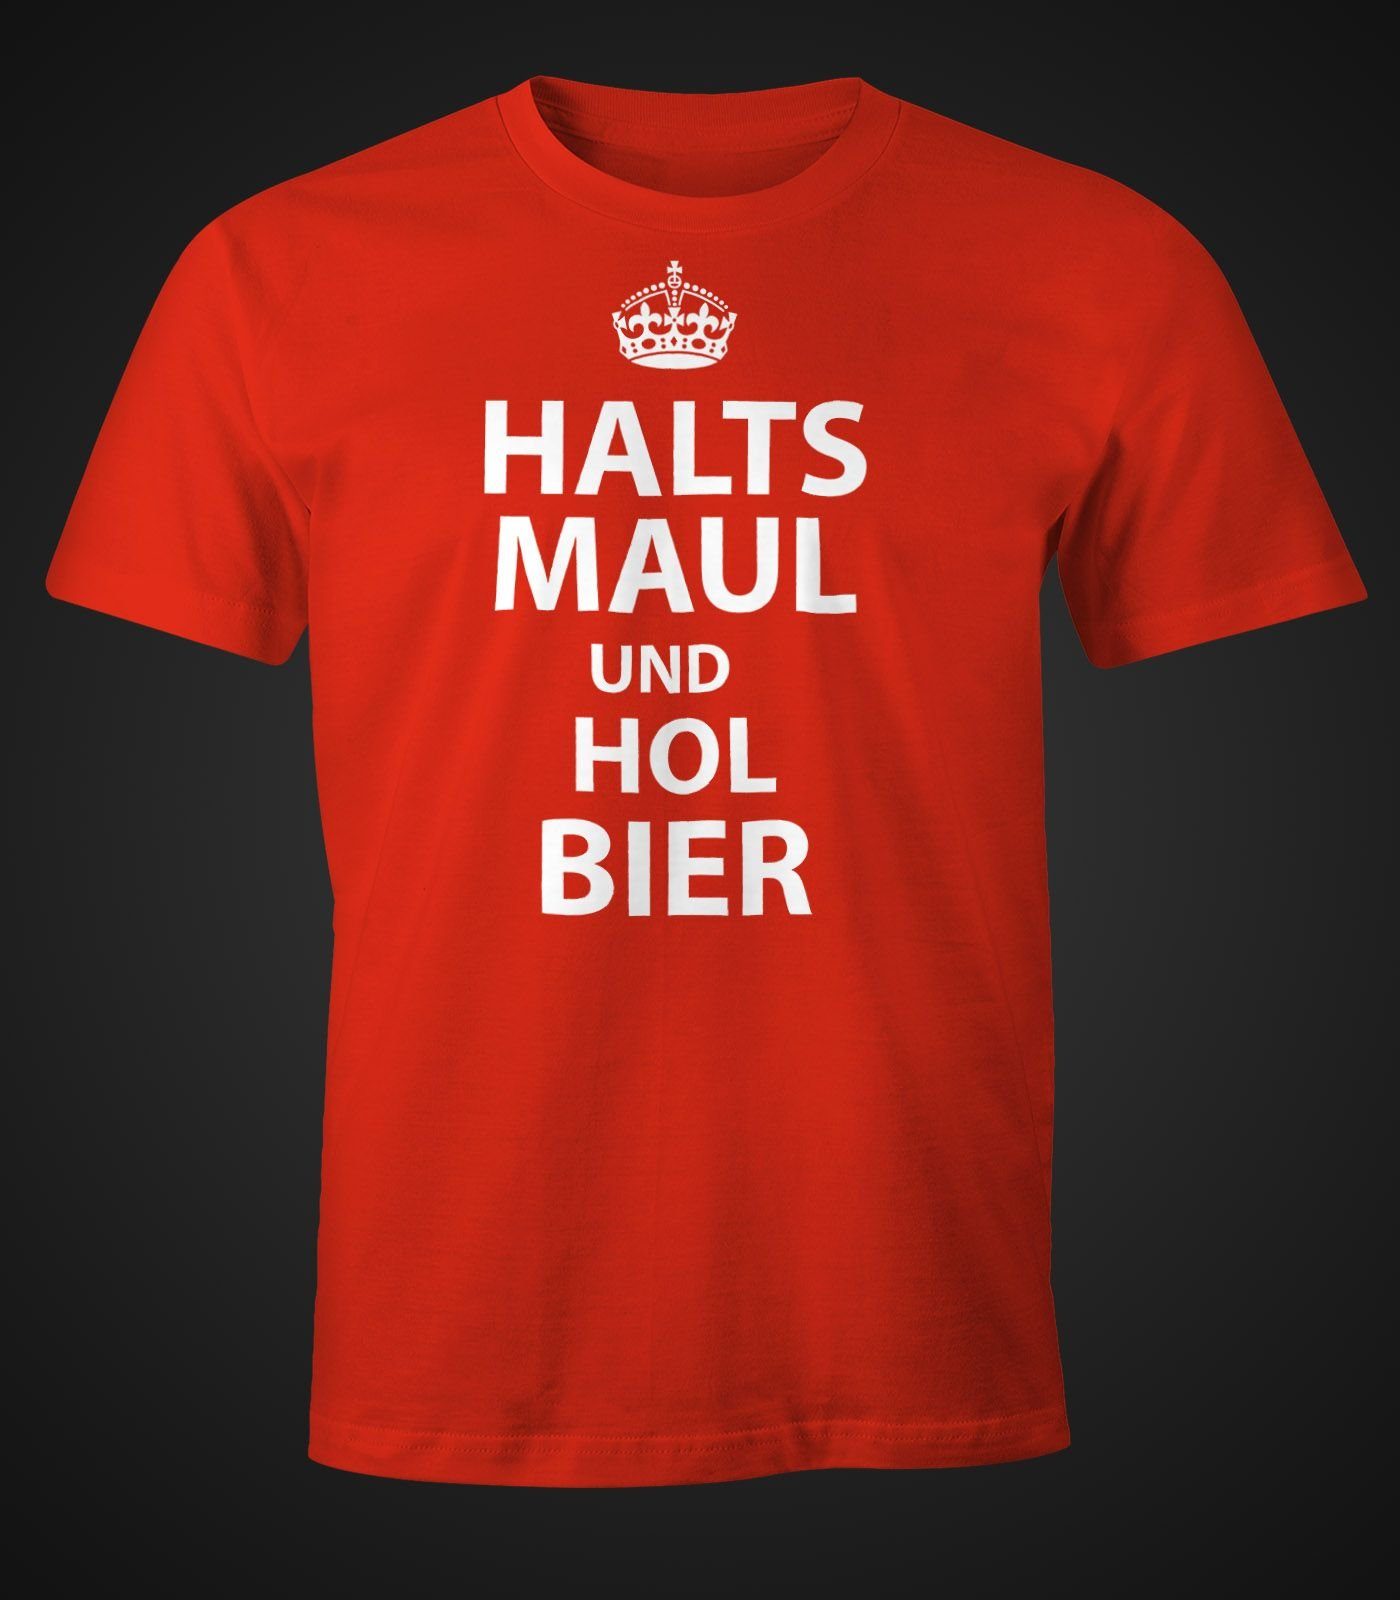 Maul hol Moonworks® mit rot Print-Shirt Fun-Shirt MoonWorks Halts T-Shirt Print und Bier Herren